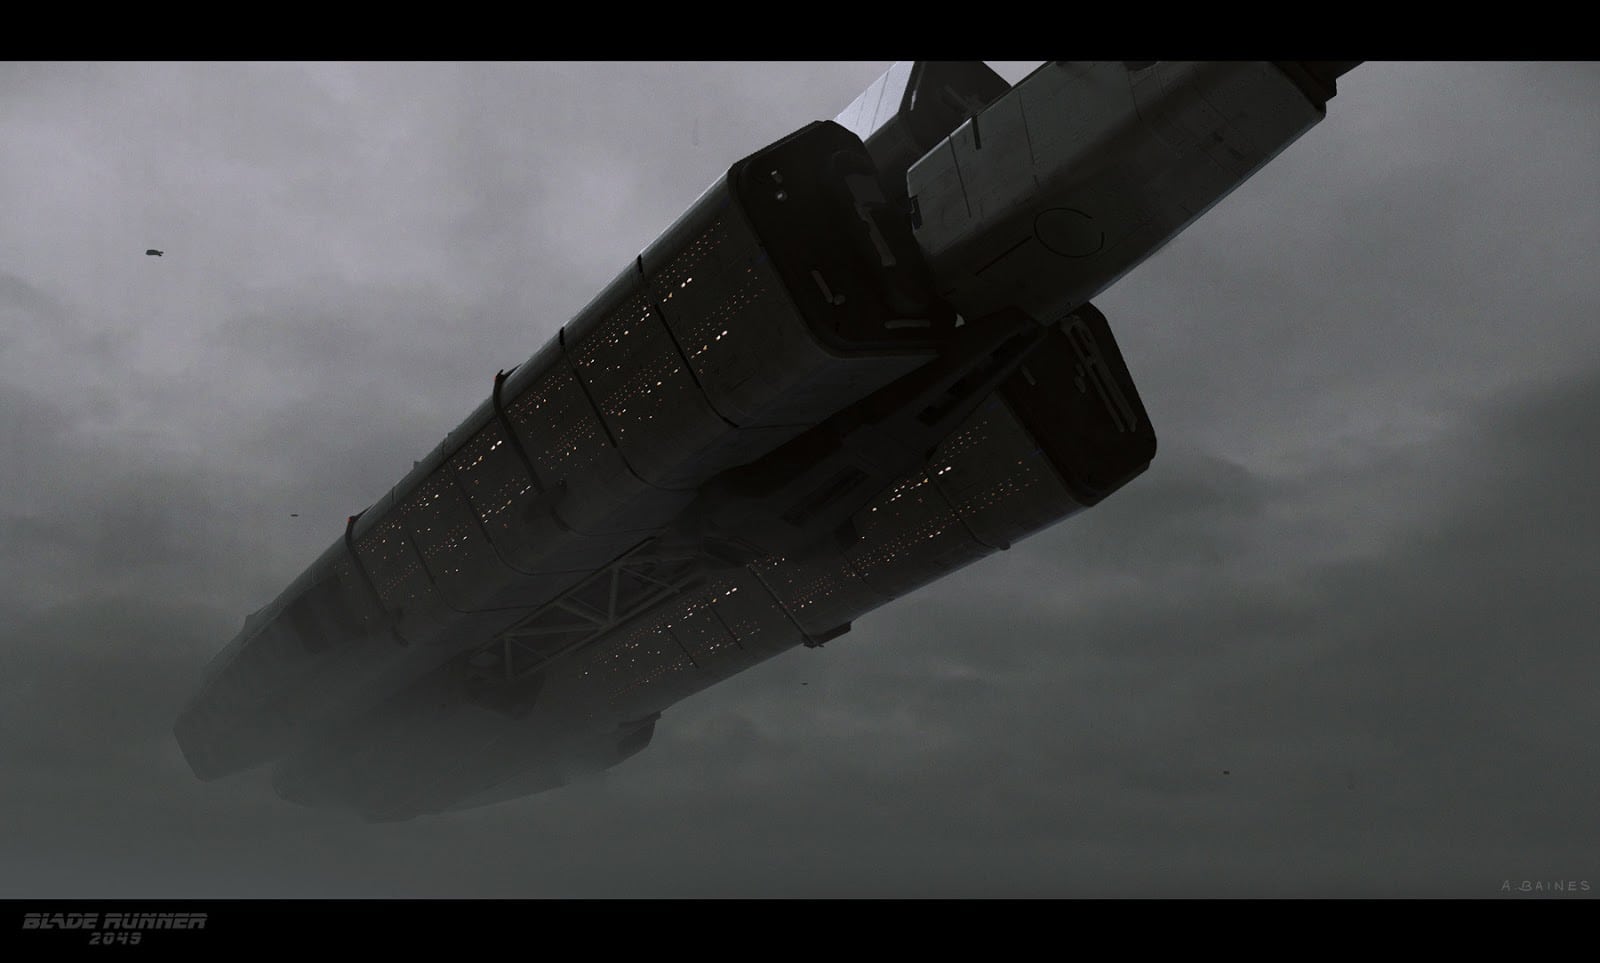 Blade-Runner-2049-Concept-Art- ilustración-Adam-Baines